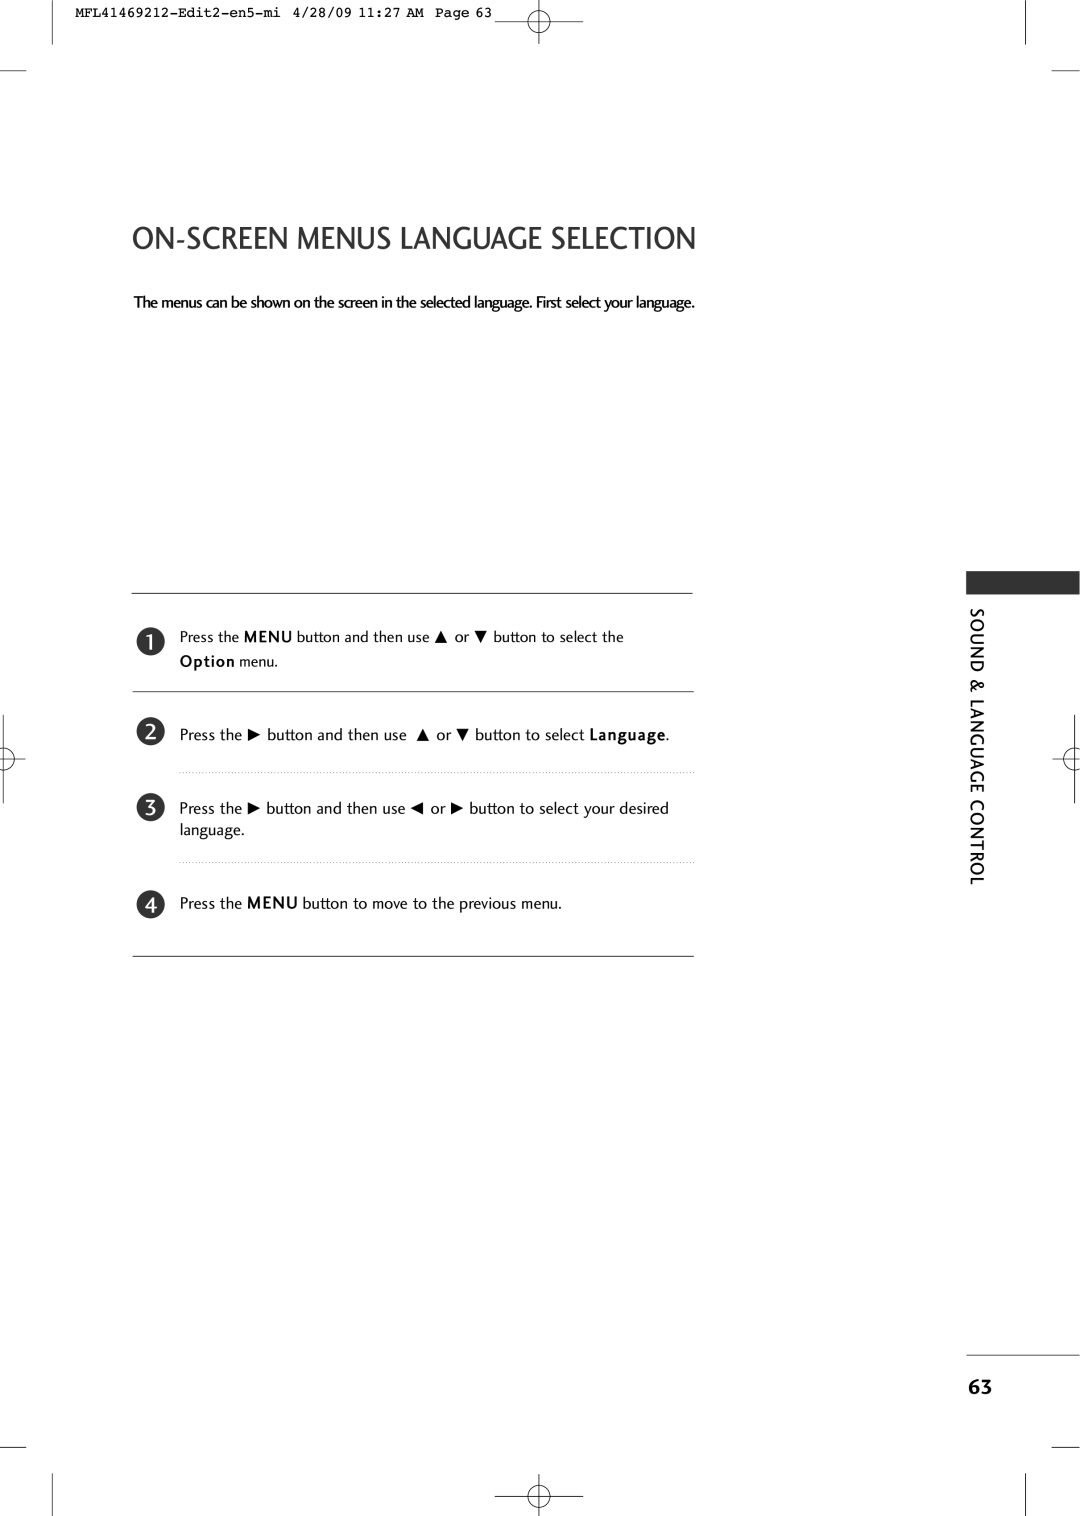 LG Electronics 2230R-MA manual On-Screen Menus Language Selection, Sound & Language Control 